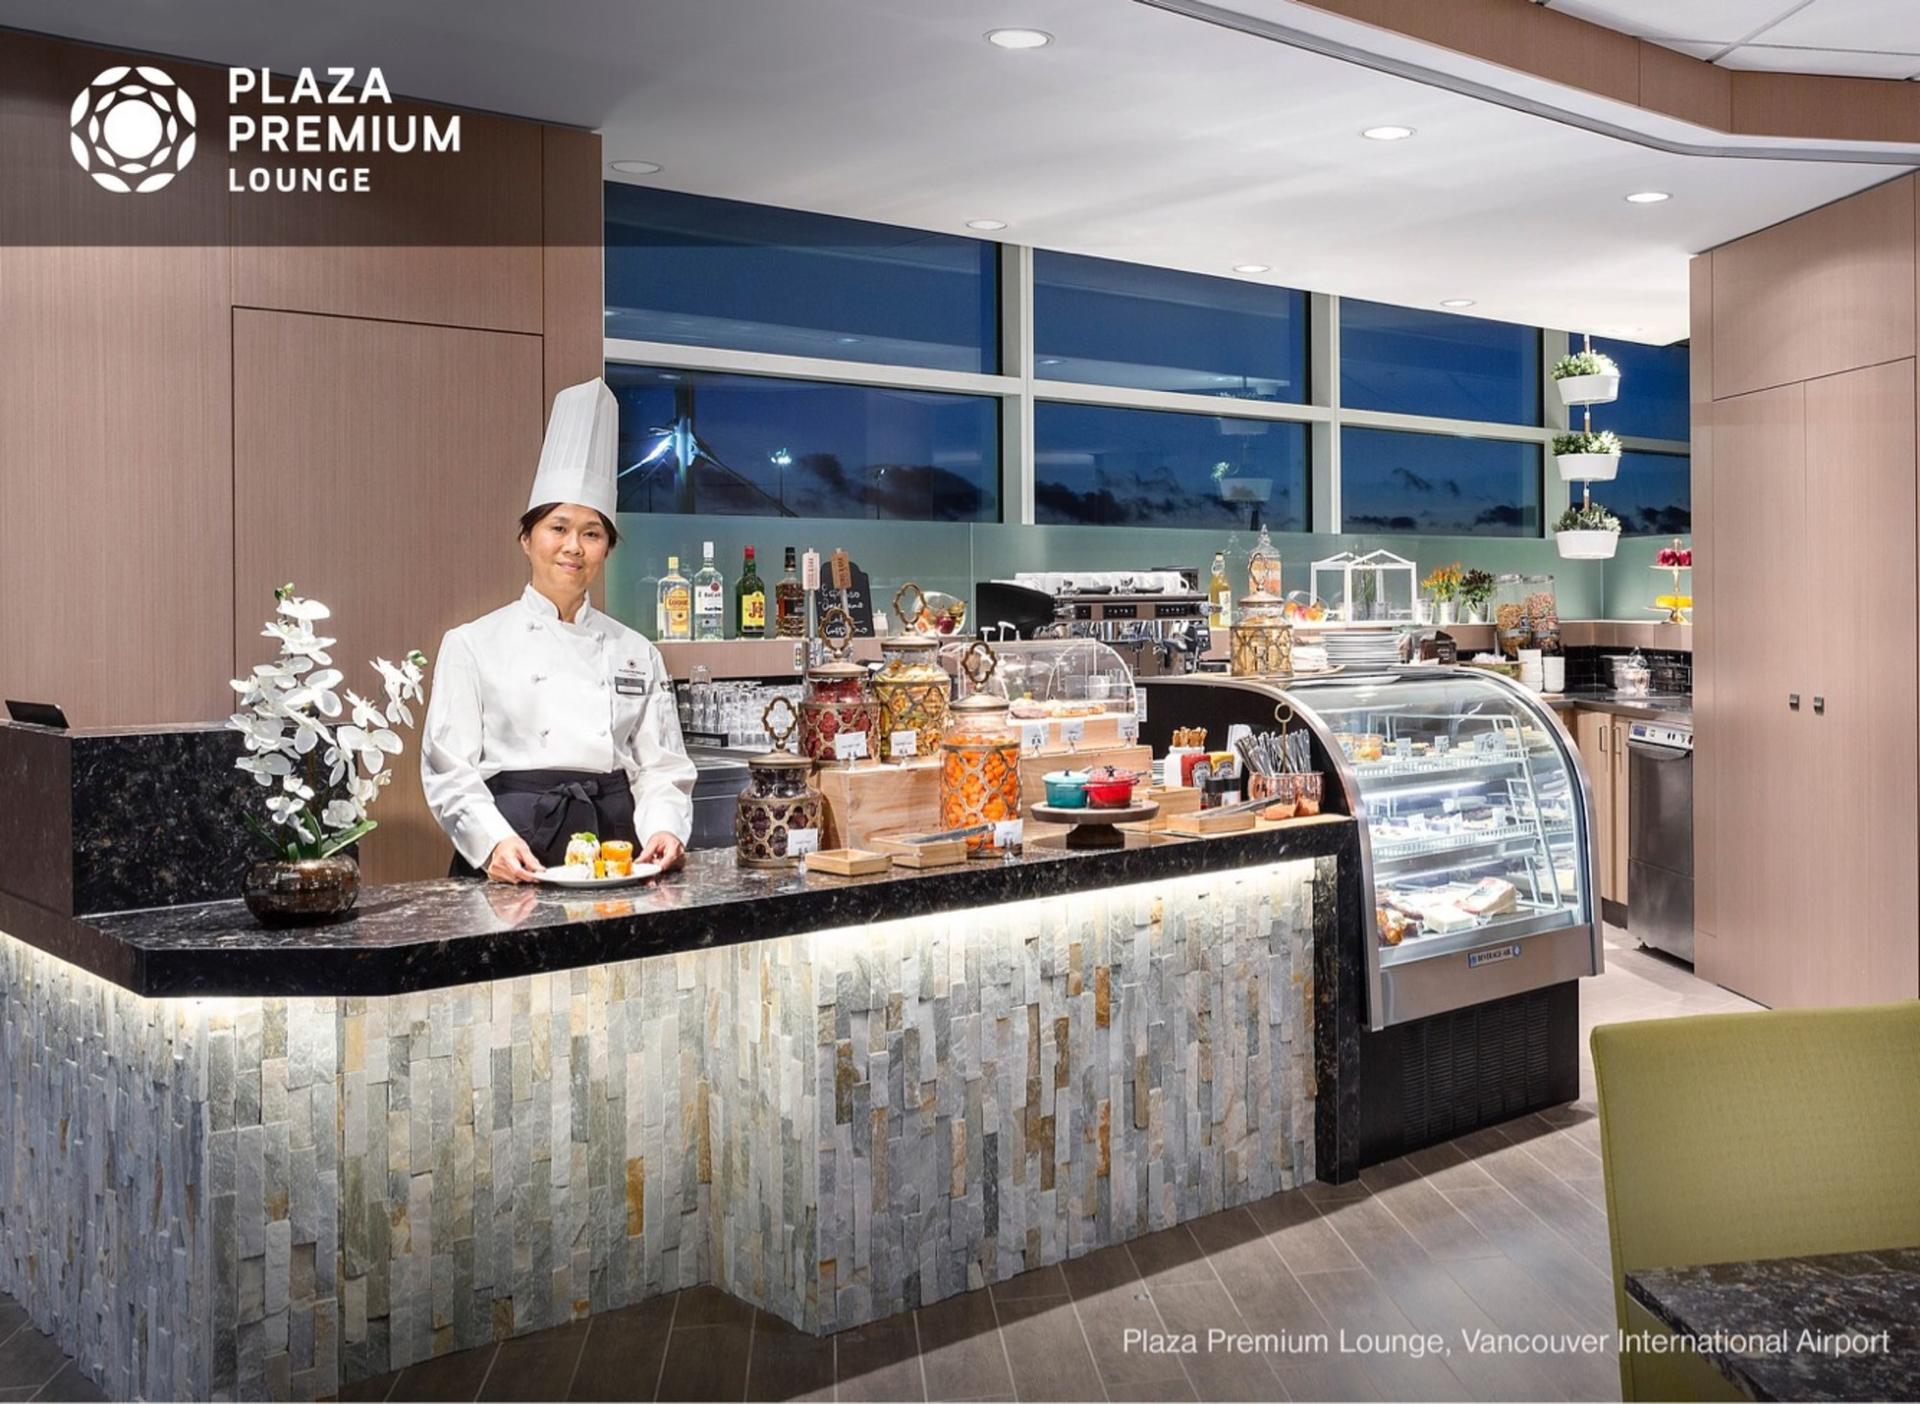 Plaza Premium Lounge (Domestic Gate C29) image 8 of 17